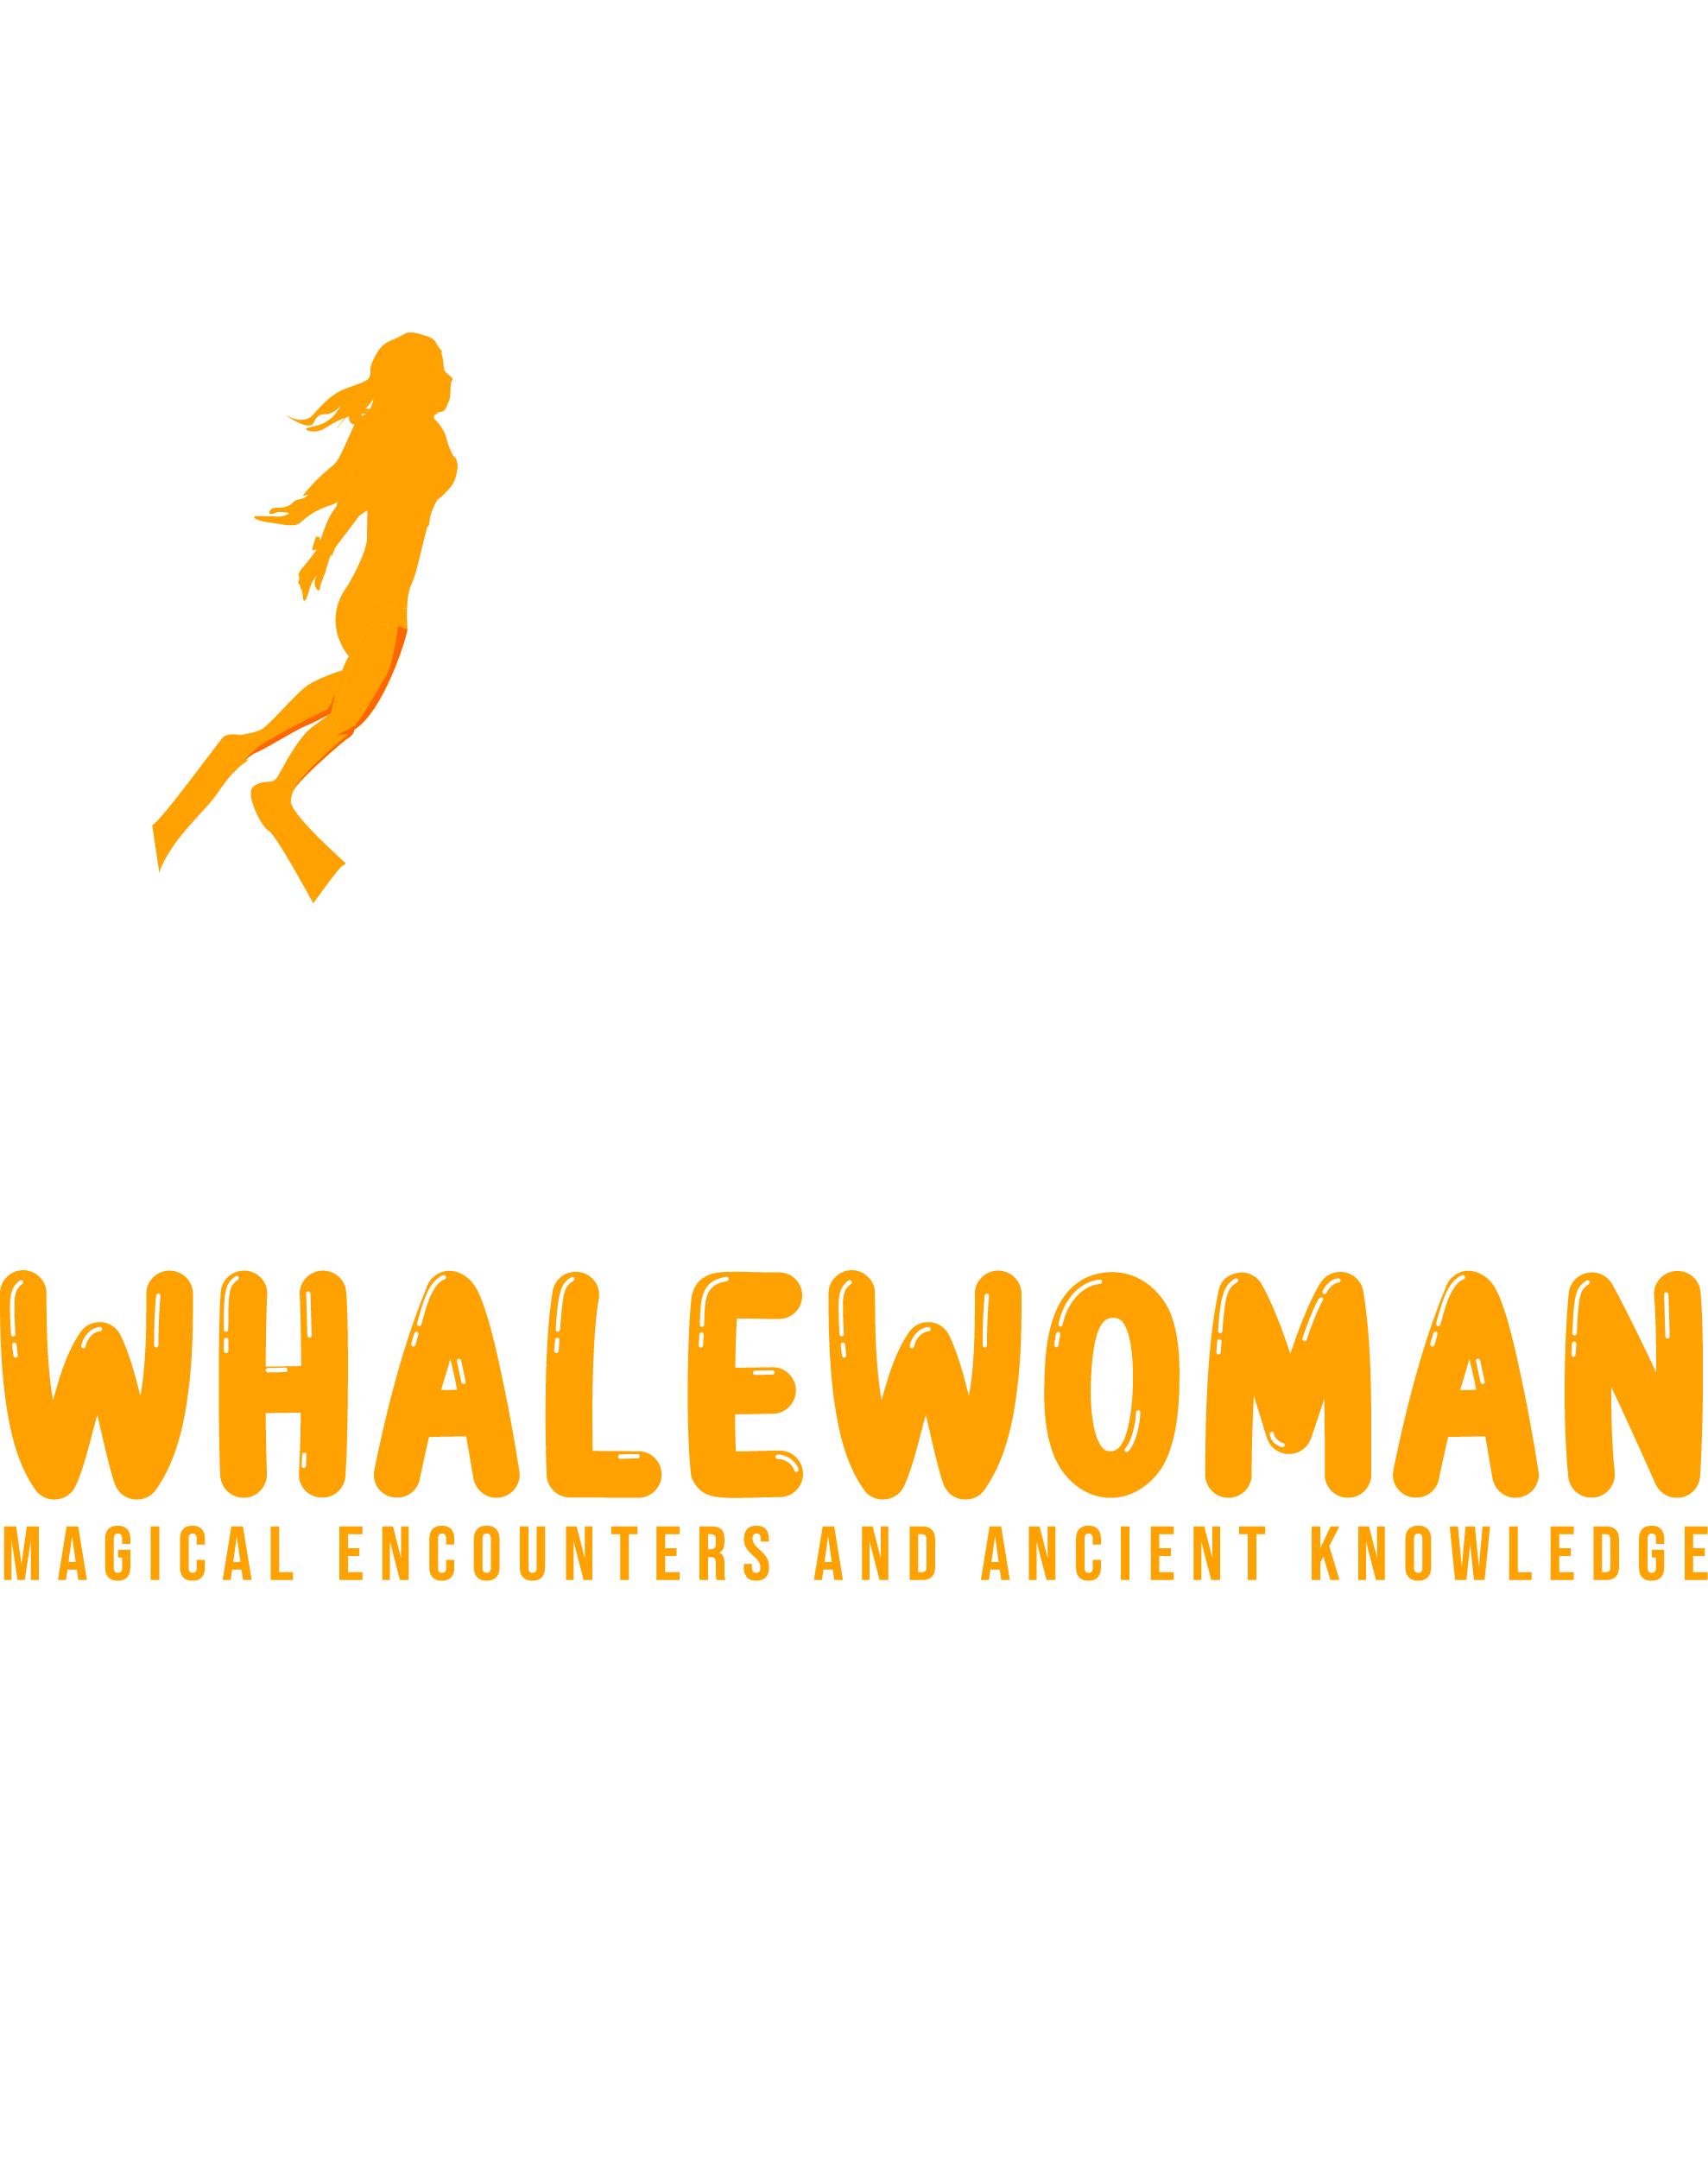 WhaleWoman